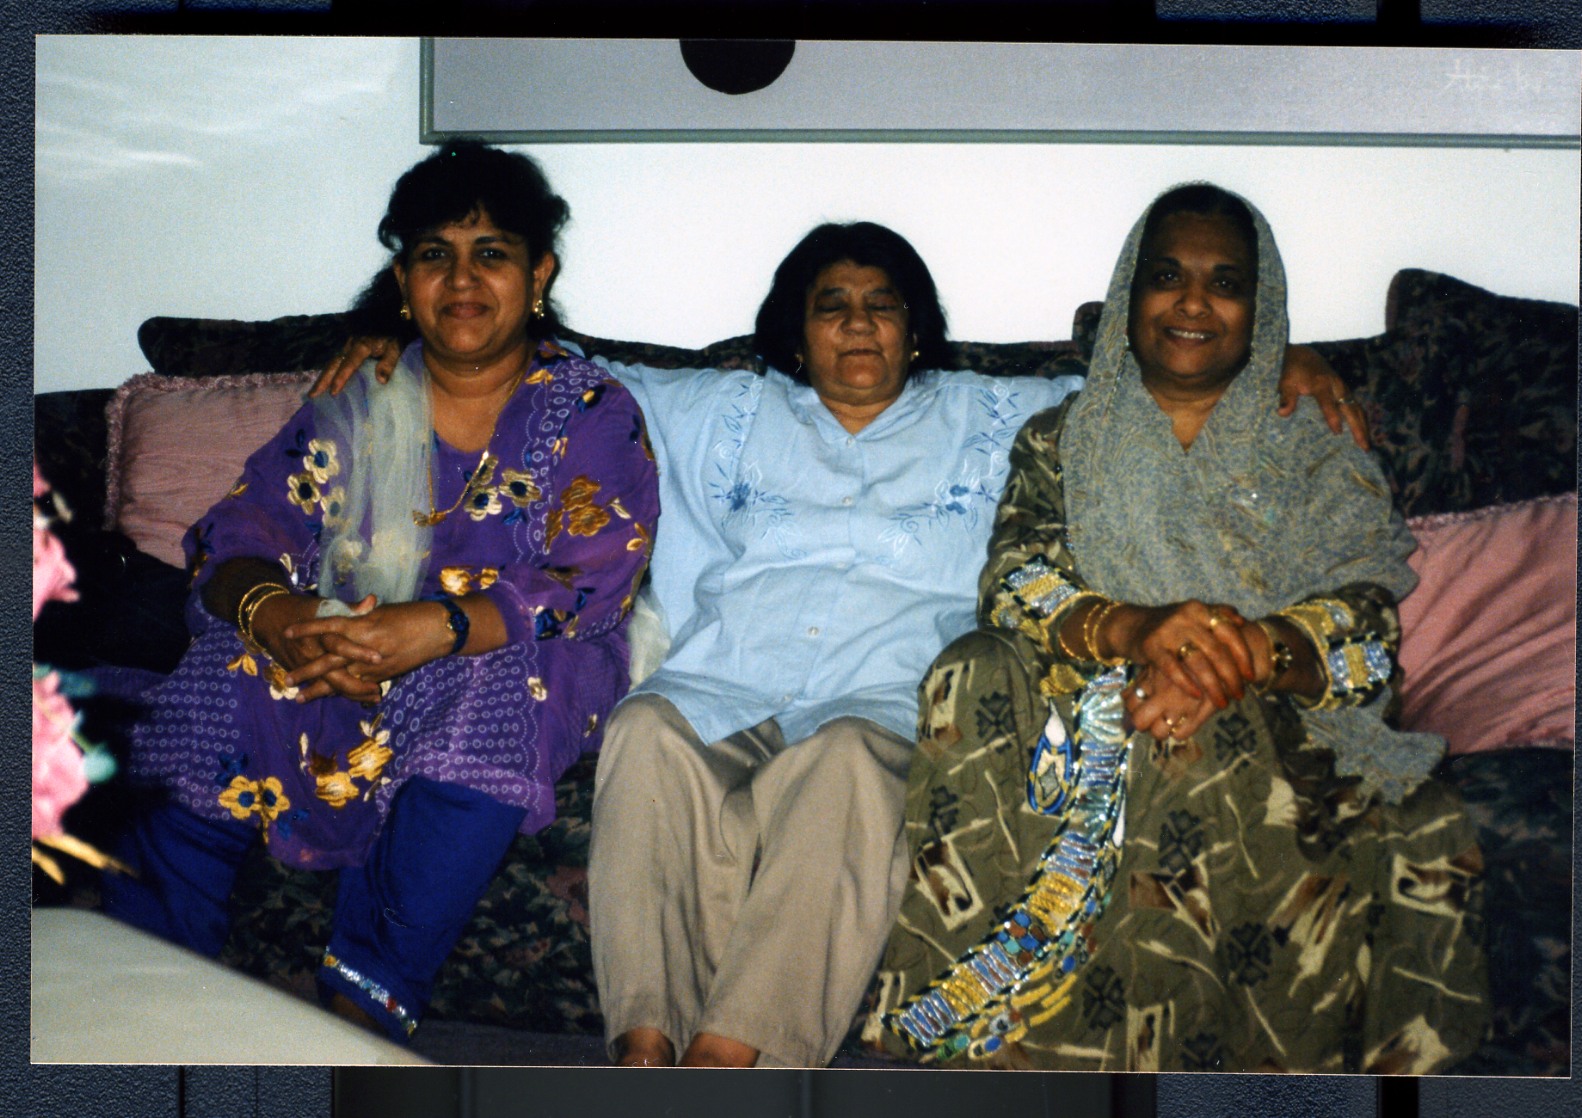 Sakinabai, Hanifabai (center) and Kamimasi